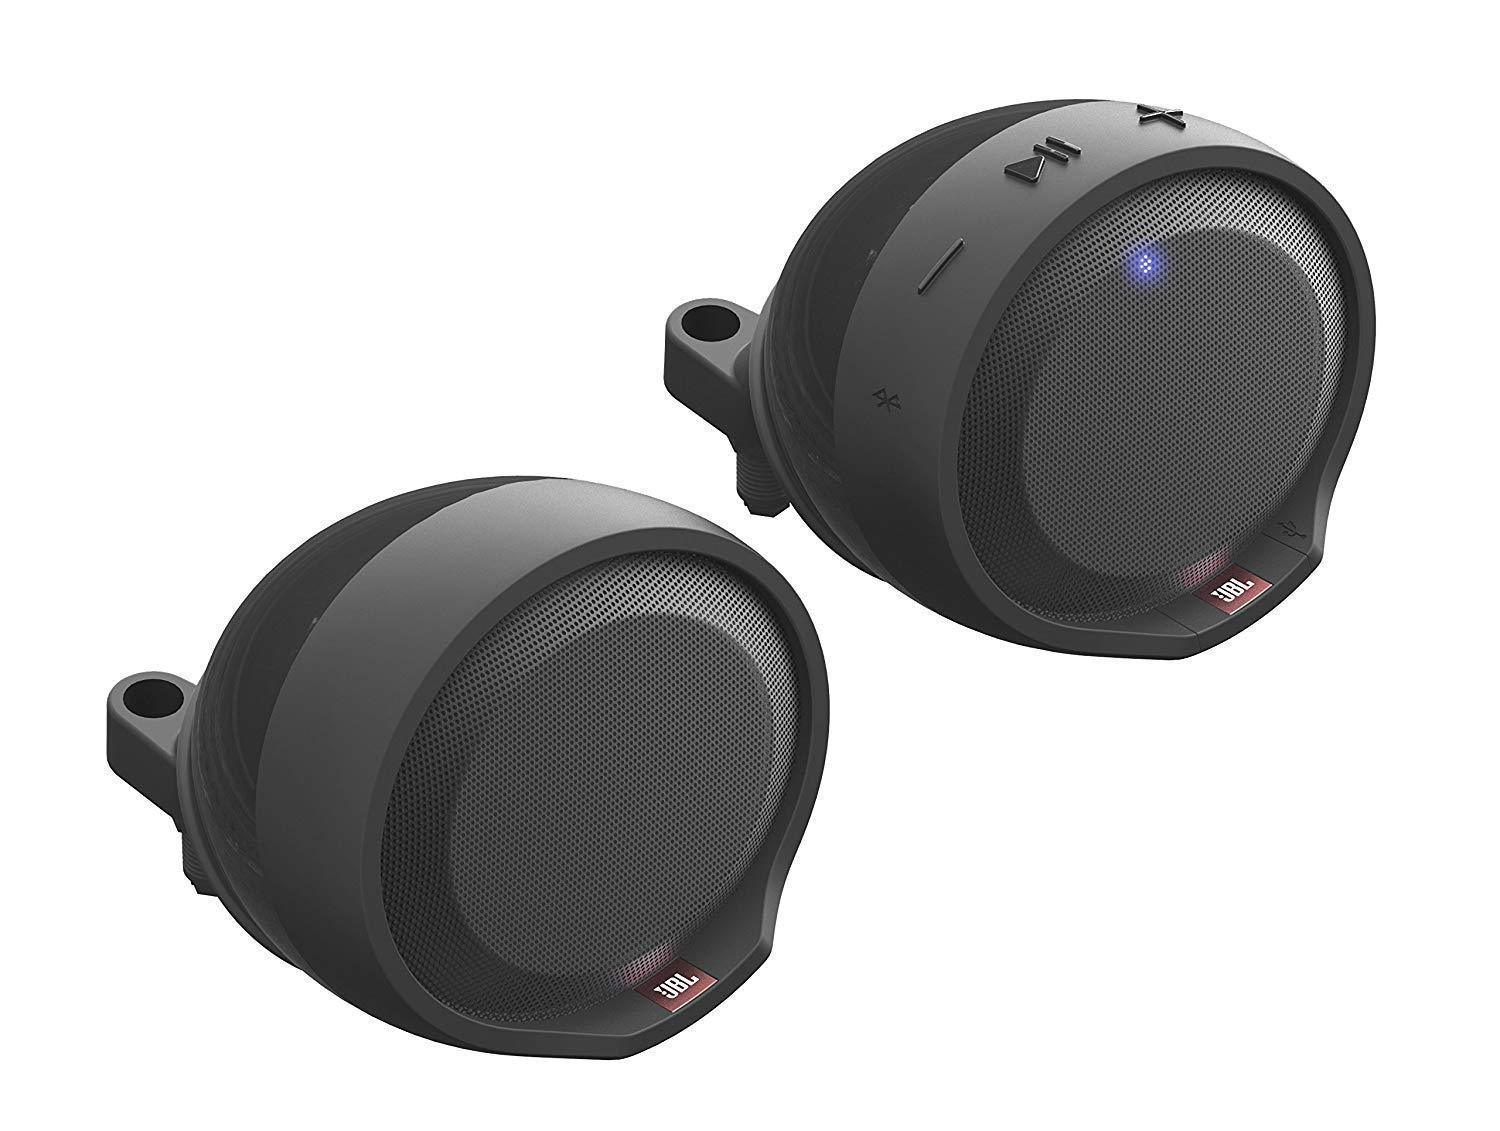 JBL Cruise Bluetooth Handlebar Speaker Kit